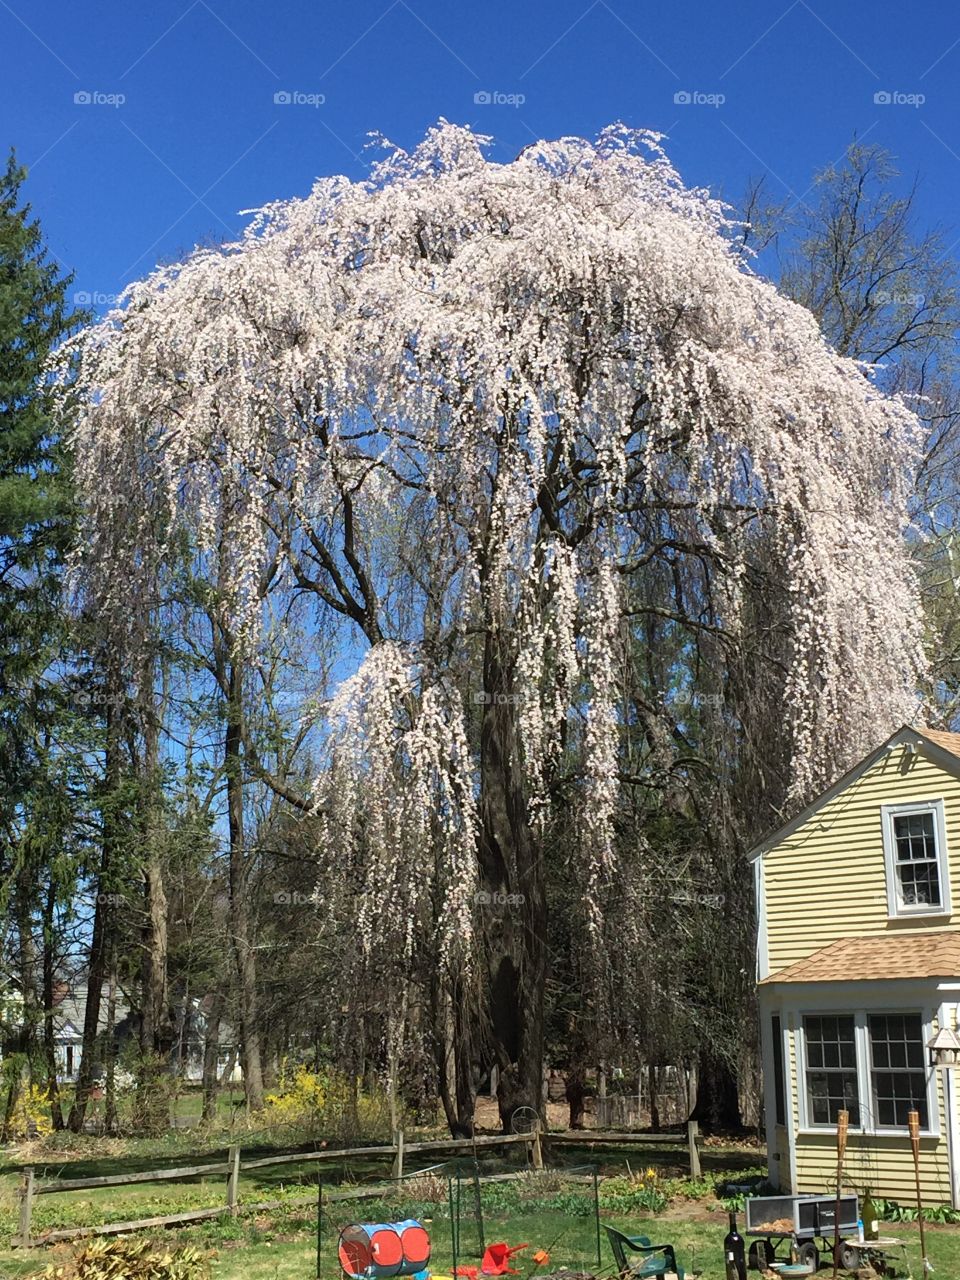 Blooming tree surrounding my home